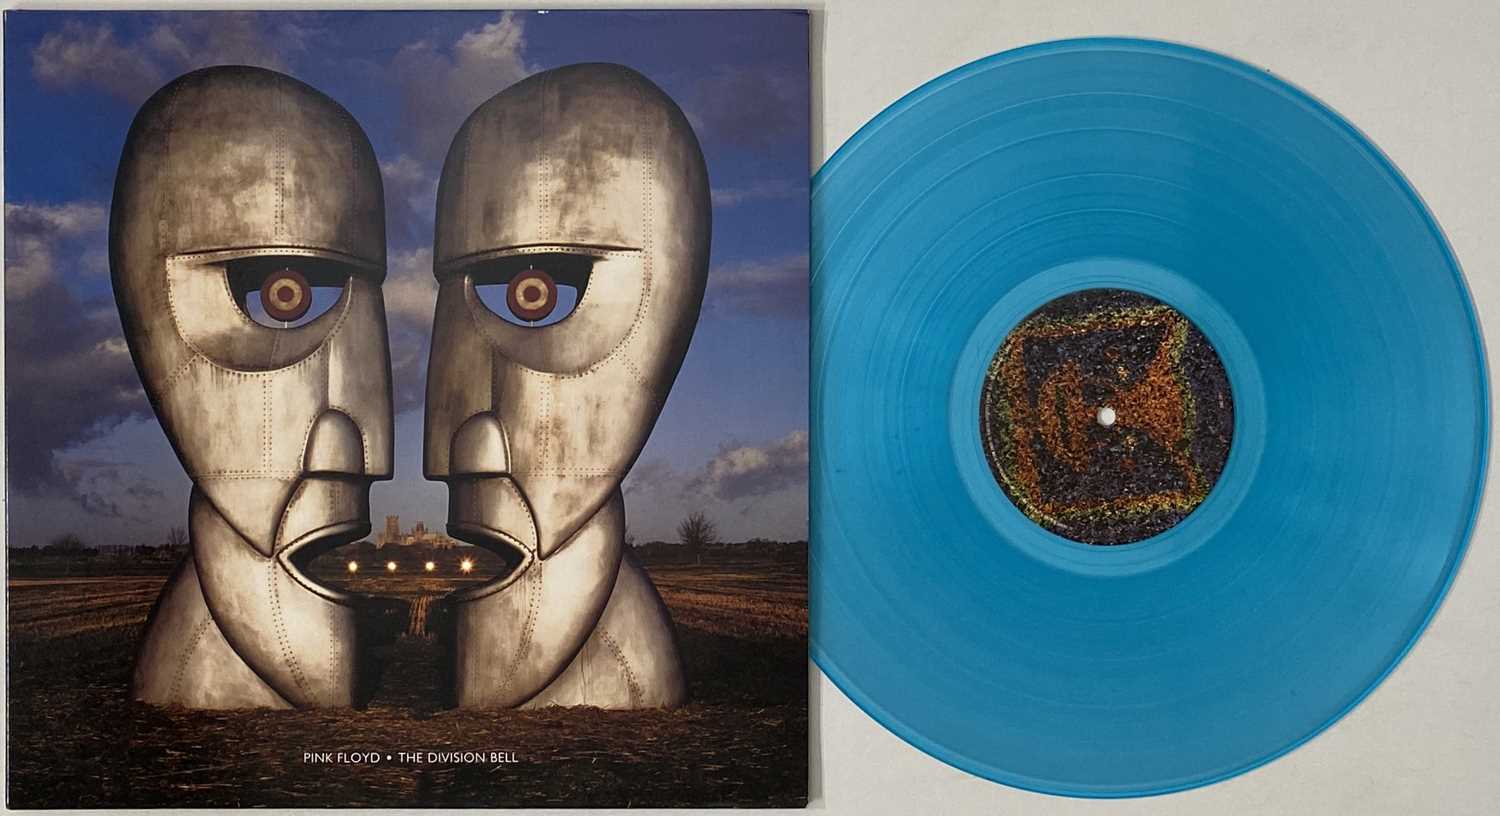 PINK FLOYD - THE DIVISION BELL LP PACK (UK & US ORIGINAL COPIES) - Image 3 of 3